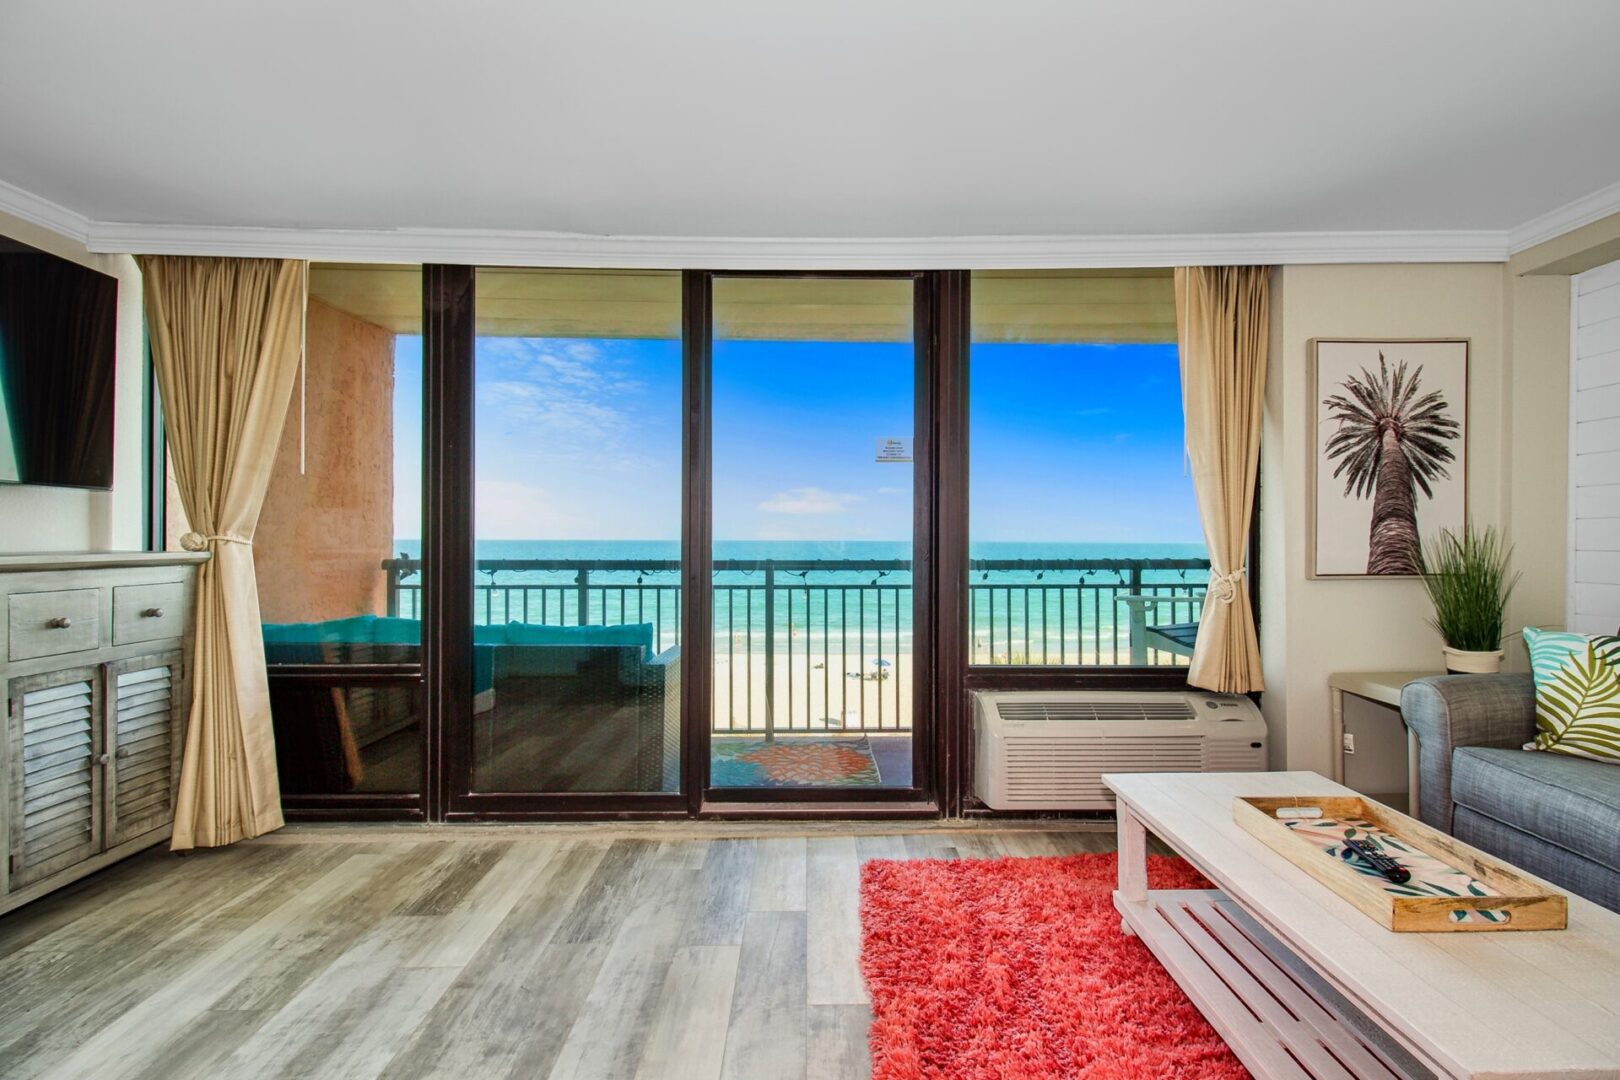 A condo near a beach with a balcony overlooking the sea